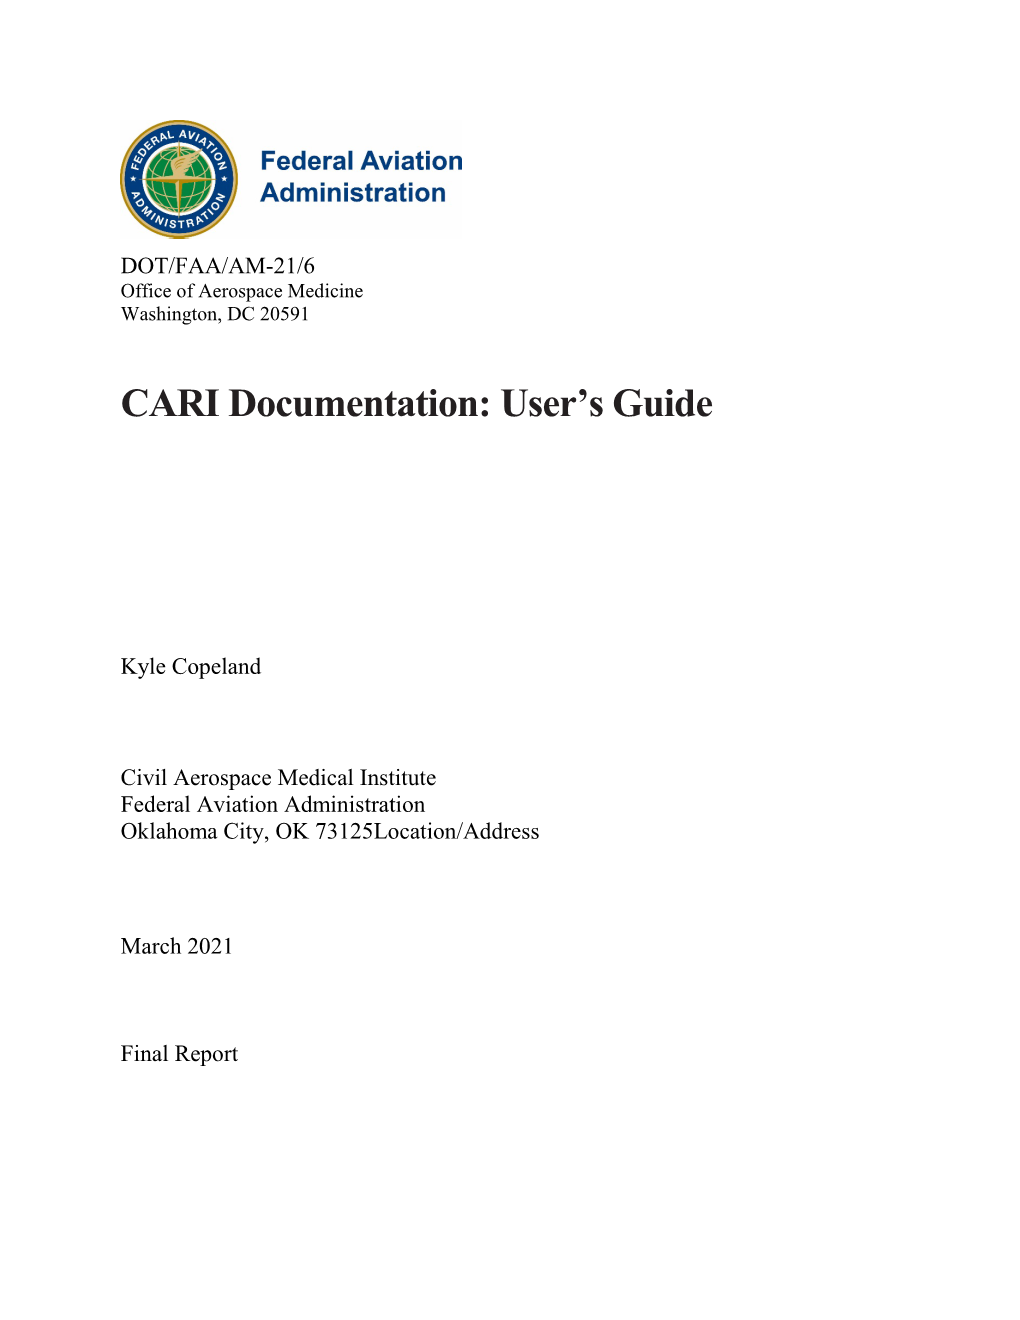 CARI-7 DOCUMENTATION: USER’S GUIDE March 2021 6